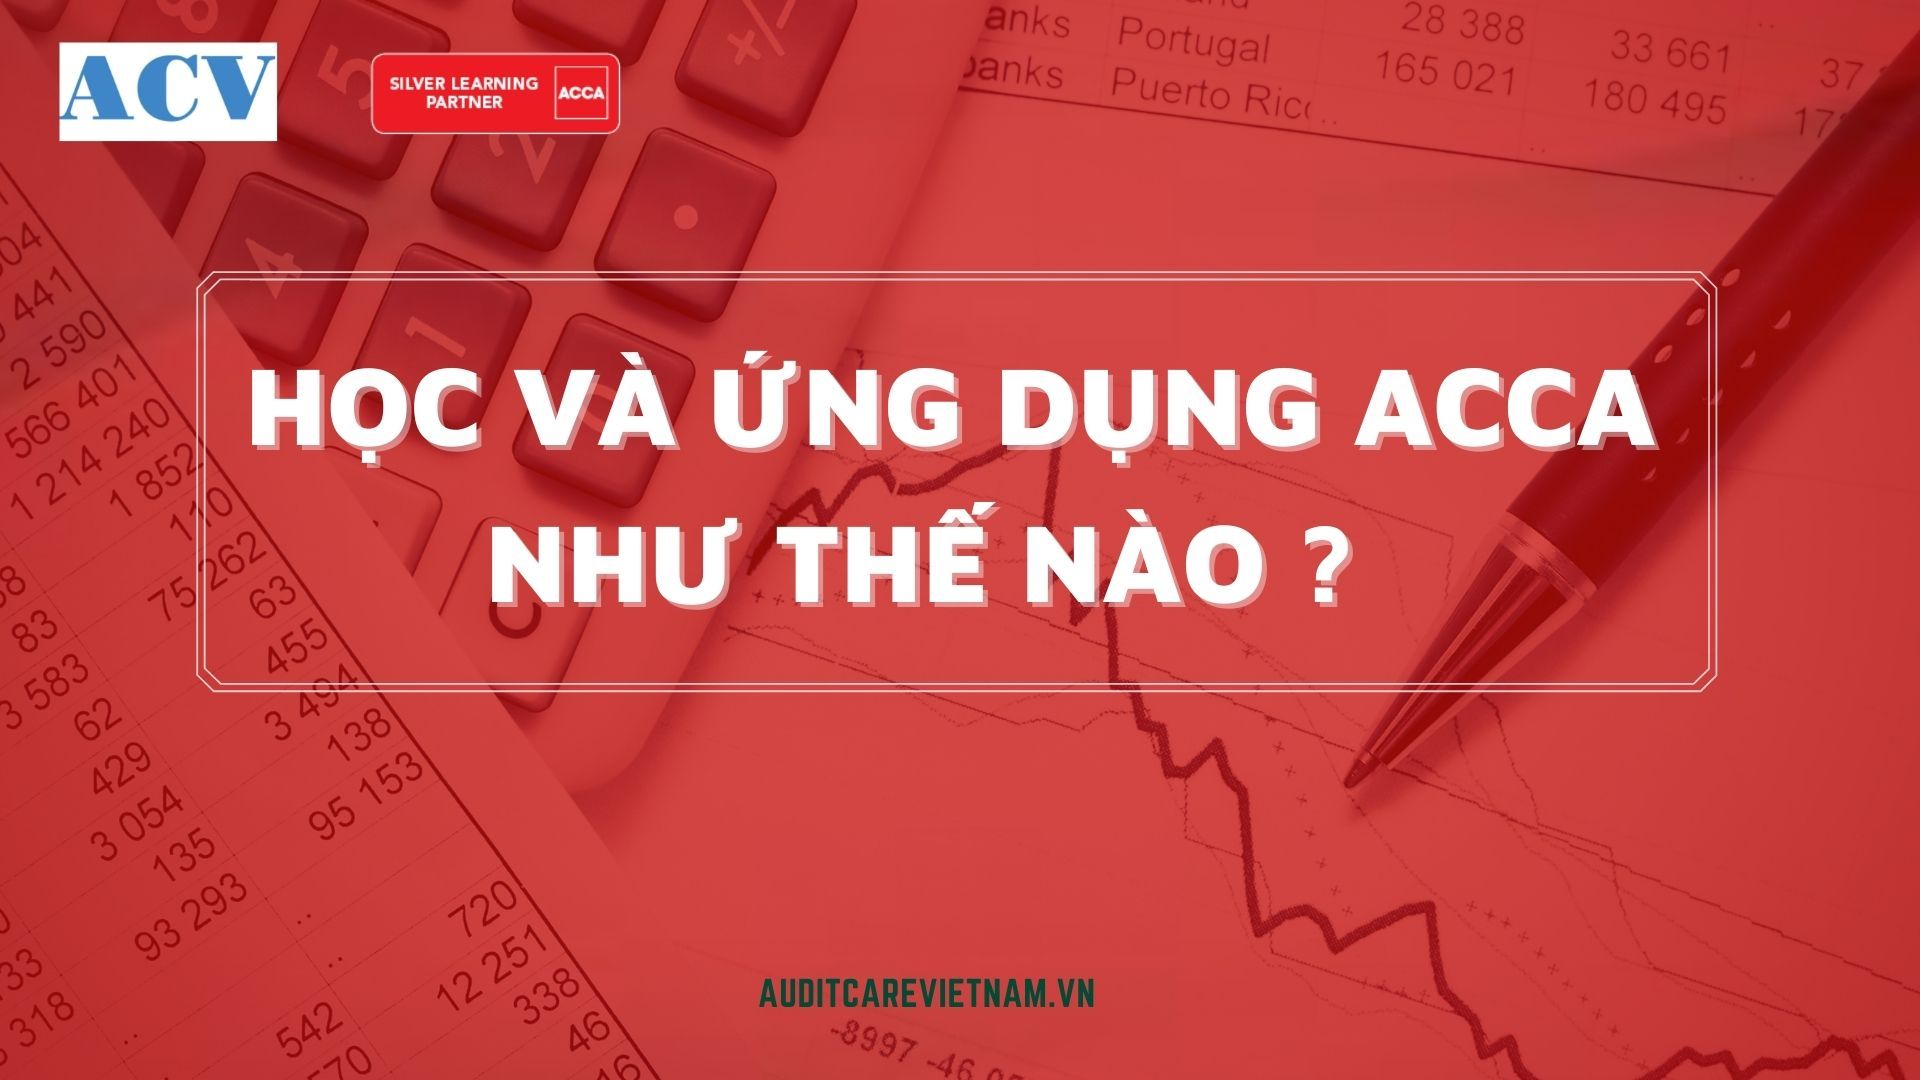 www.auditcarevietnam.vn